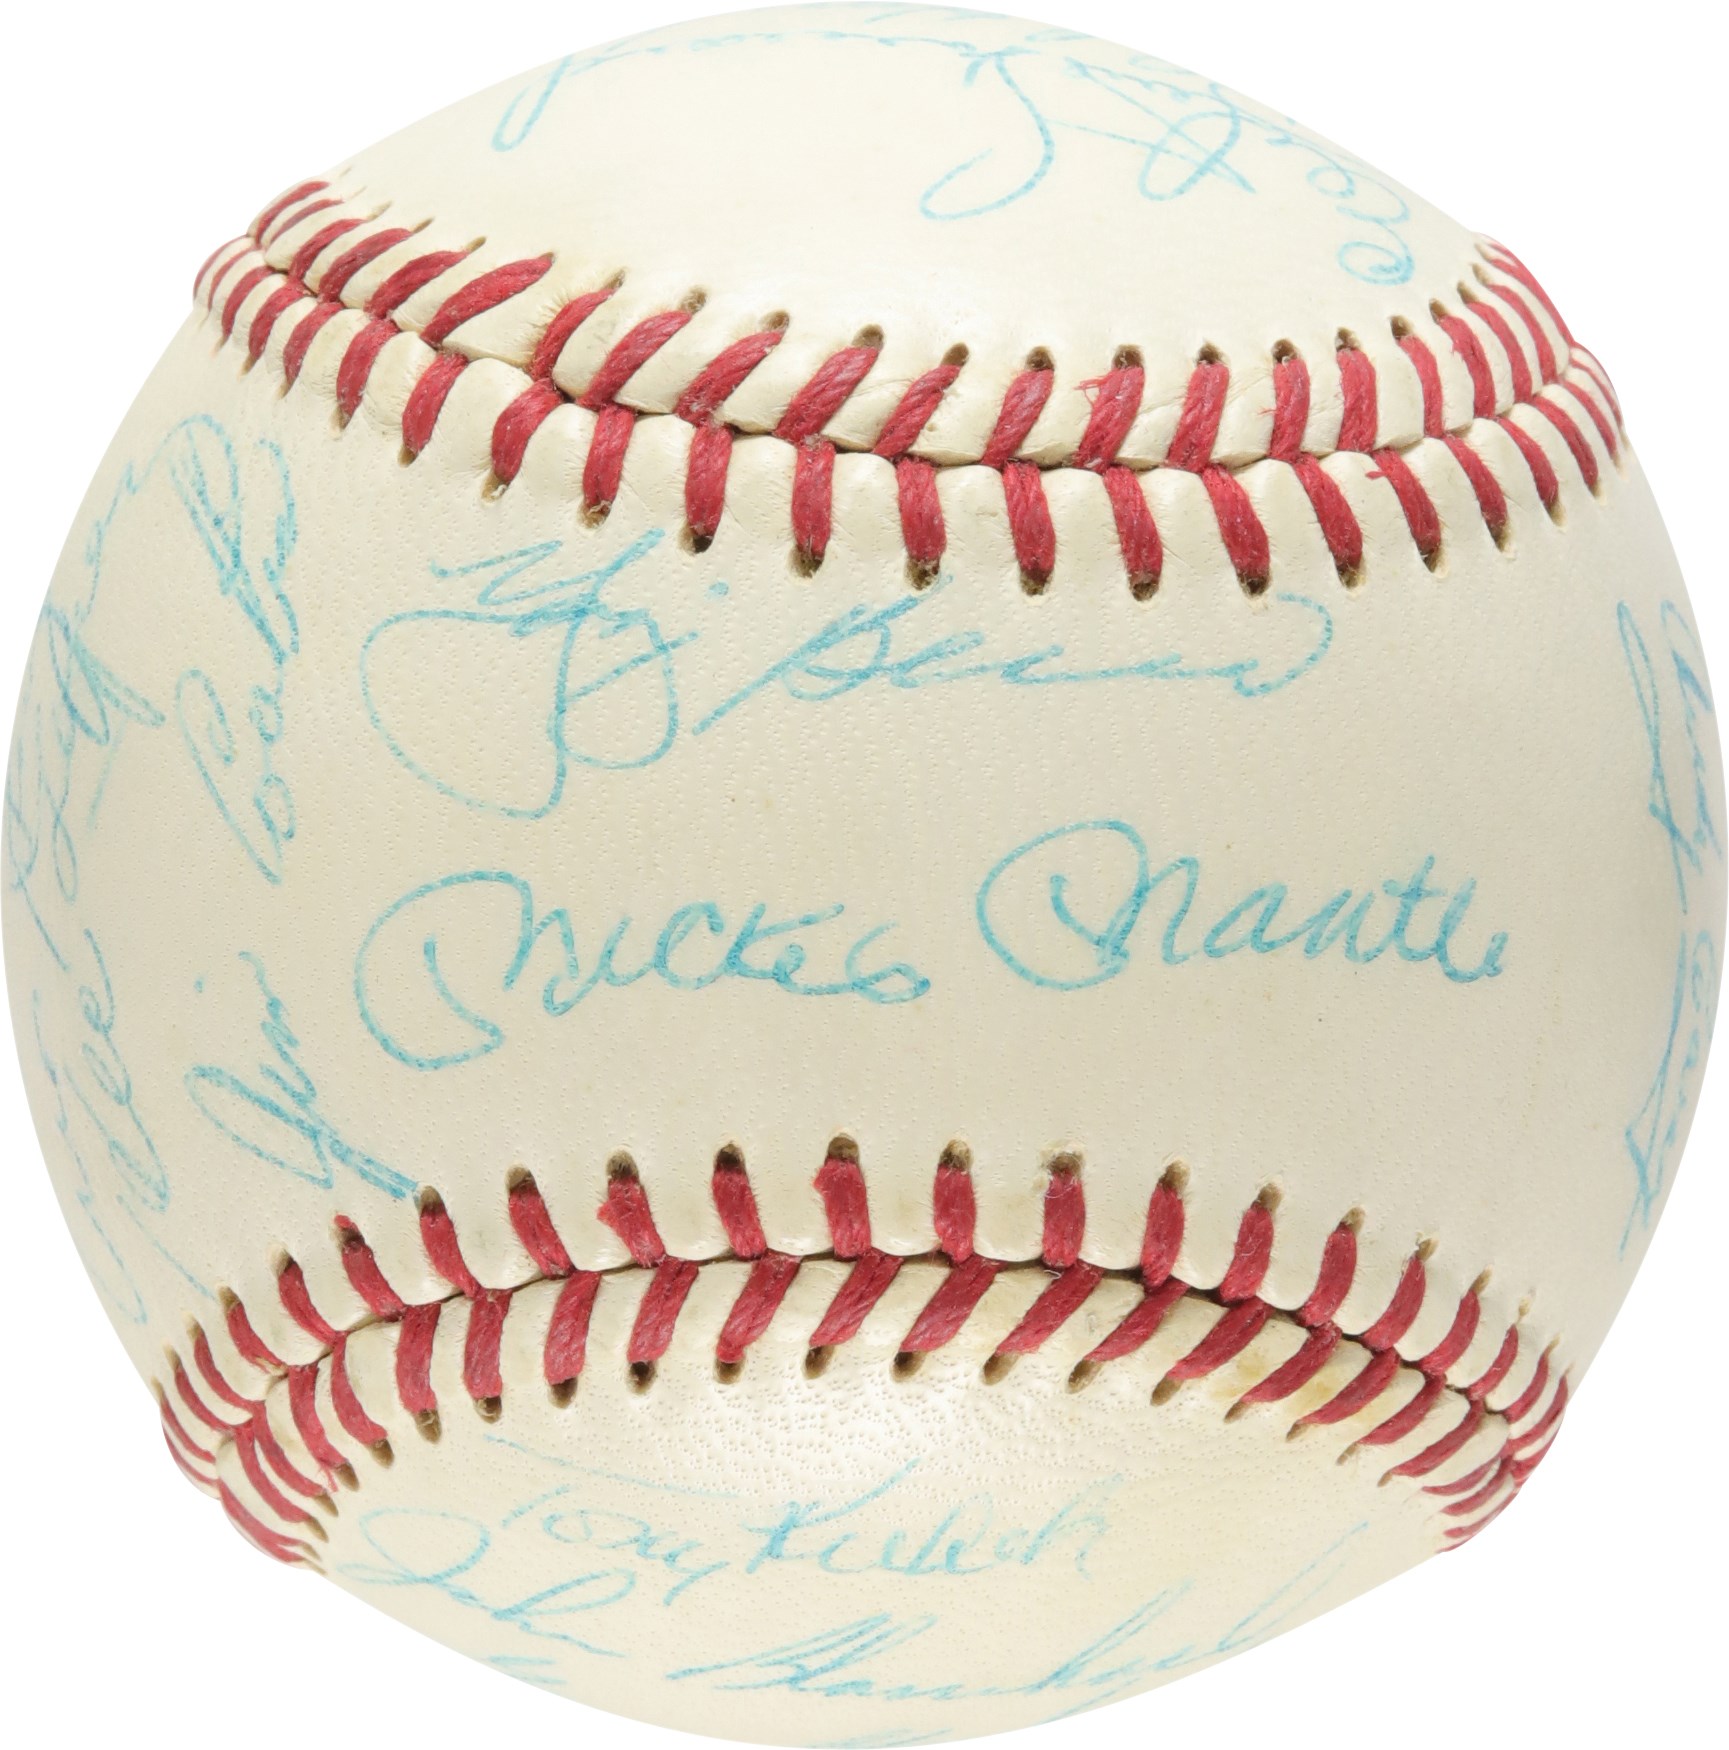 Baseball Autographs - 1959 New York Yankees Team-Signed Baseball (PSA MINT 9 Overall)